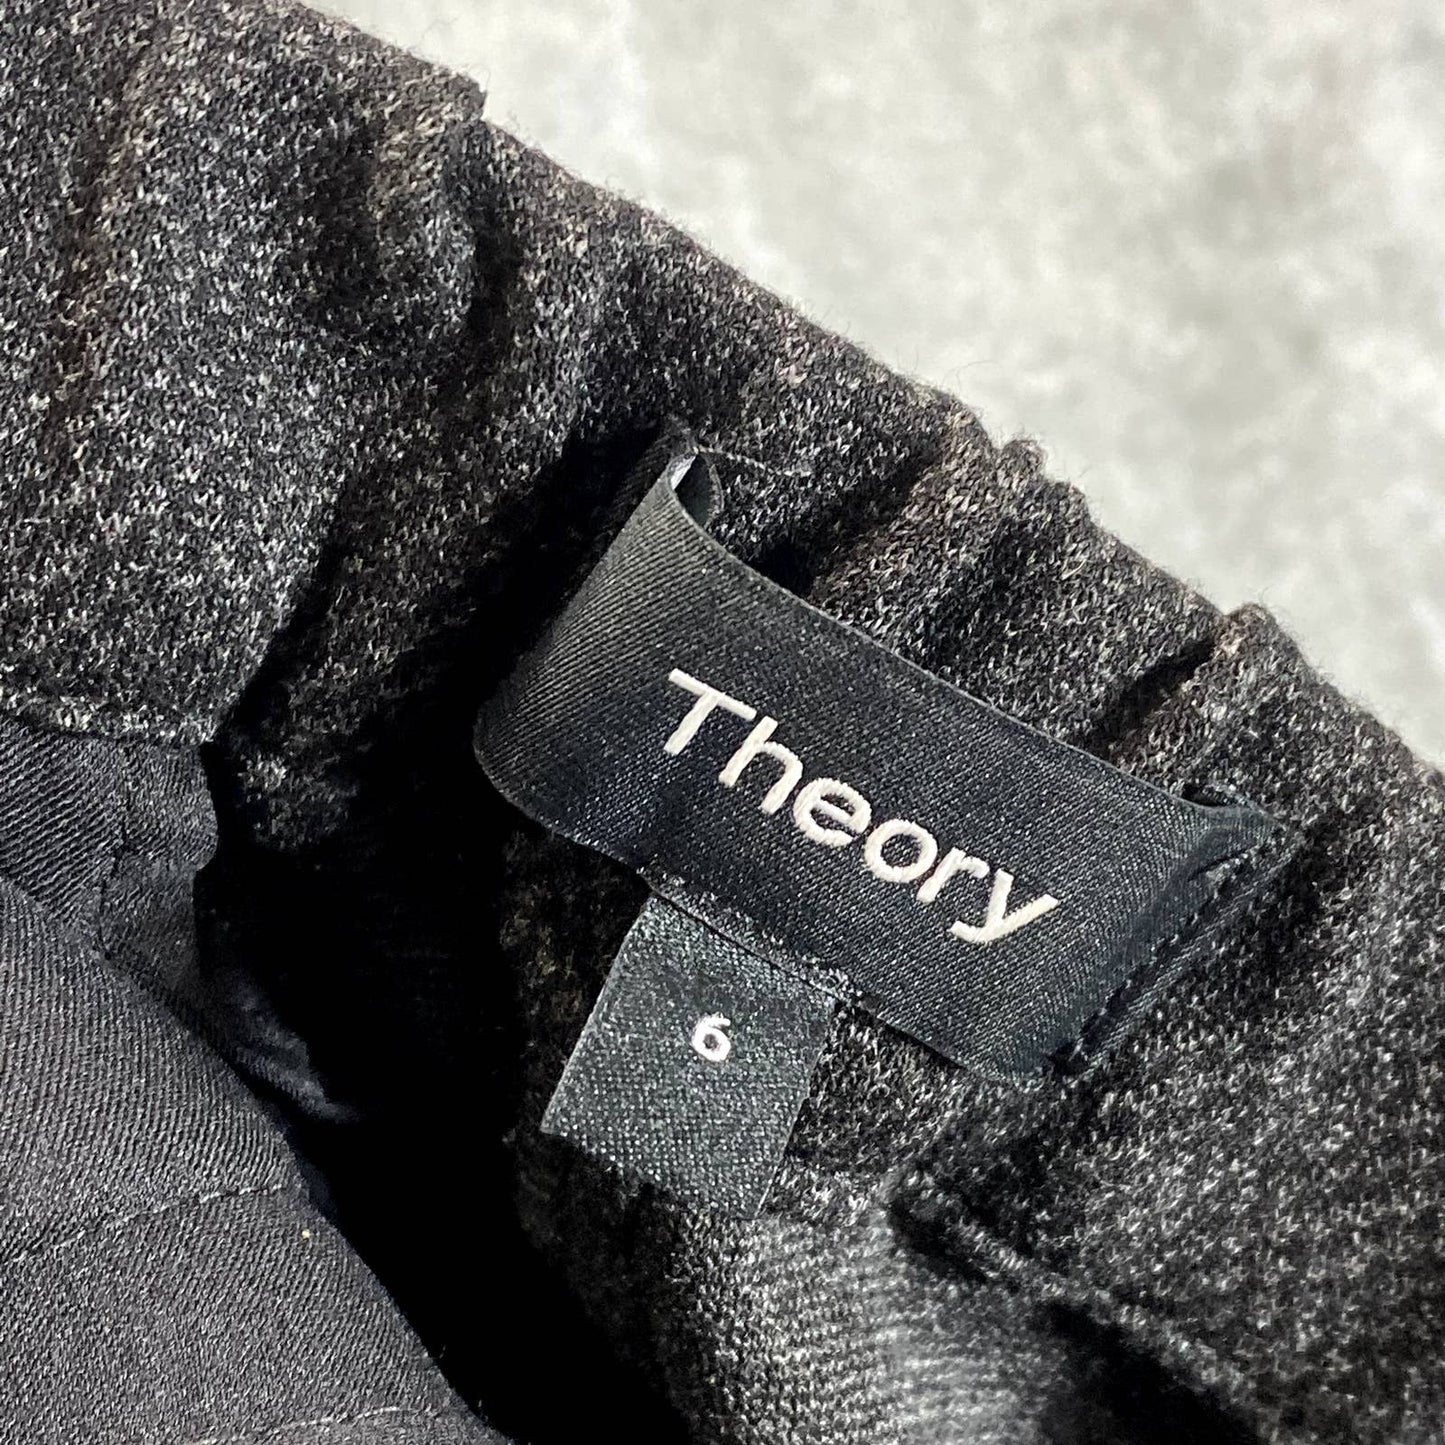 THEORY Women's Grey Multi Regent Knit Demitria Pull-On Pants SZ 6